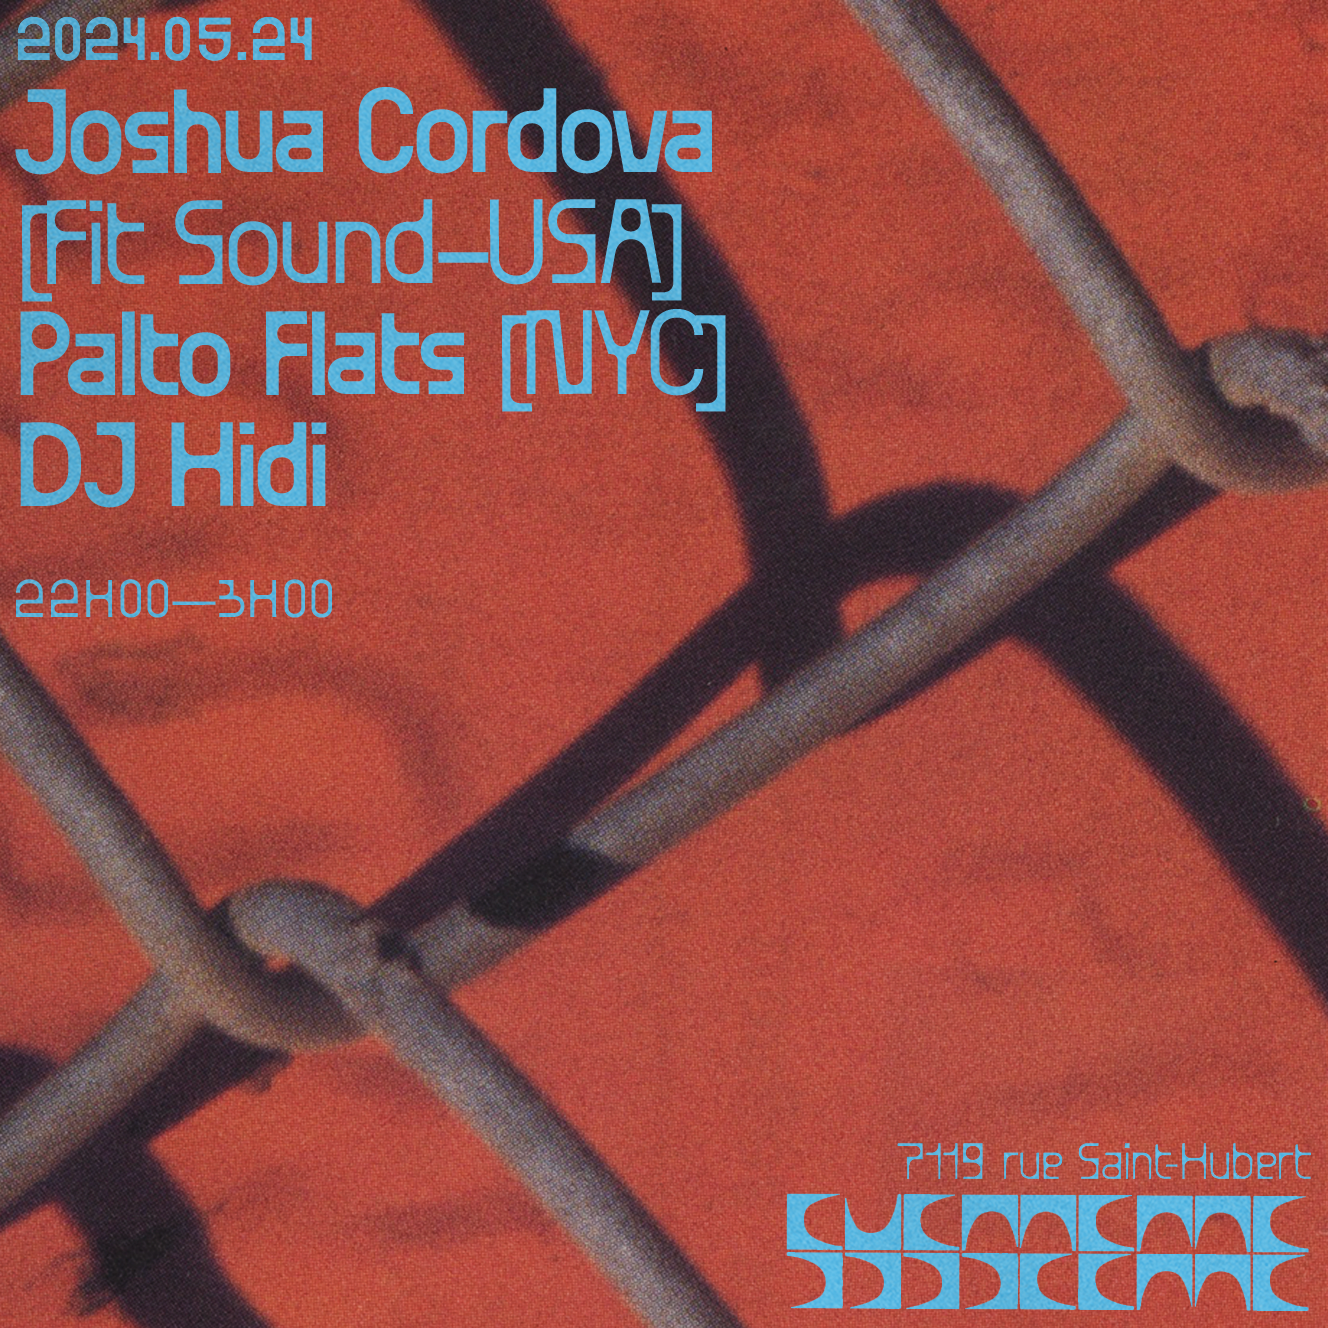 Joshua Cordova [Fit Sound - USA] + Palto Flats [NYC] + DJ Hidi - Página frontal